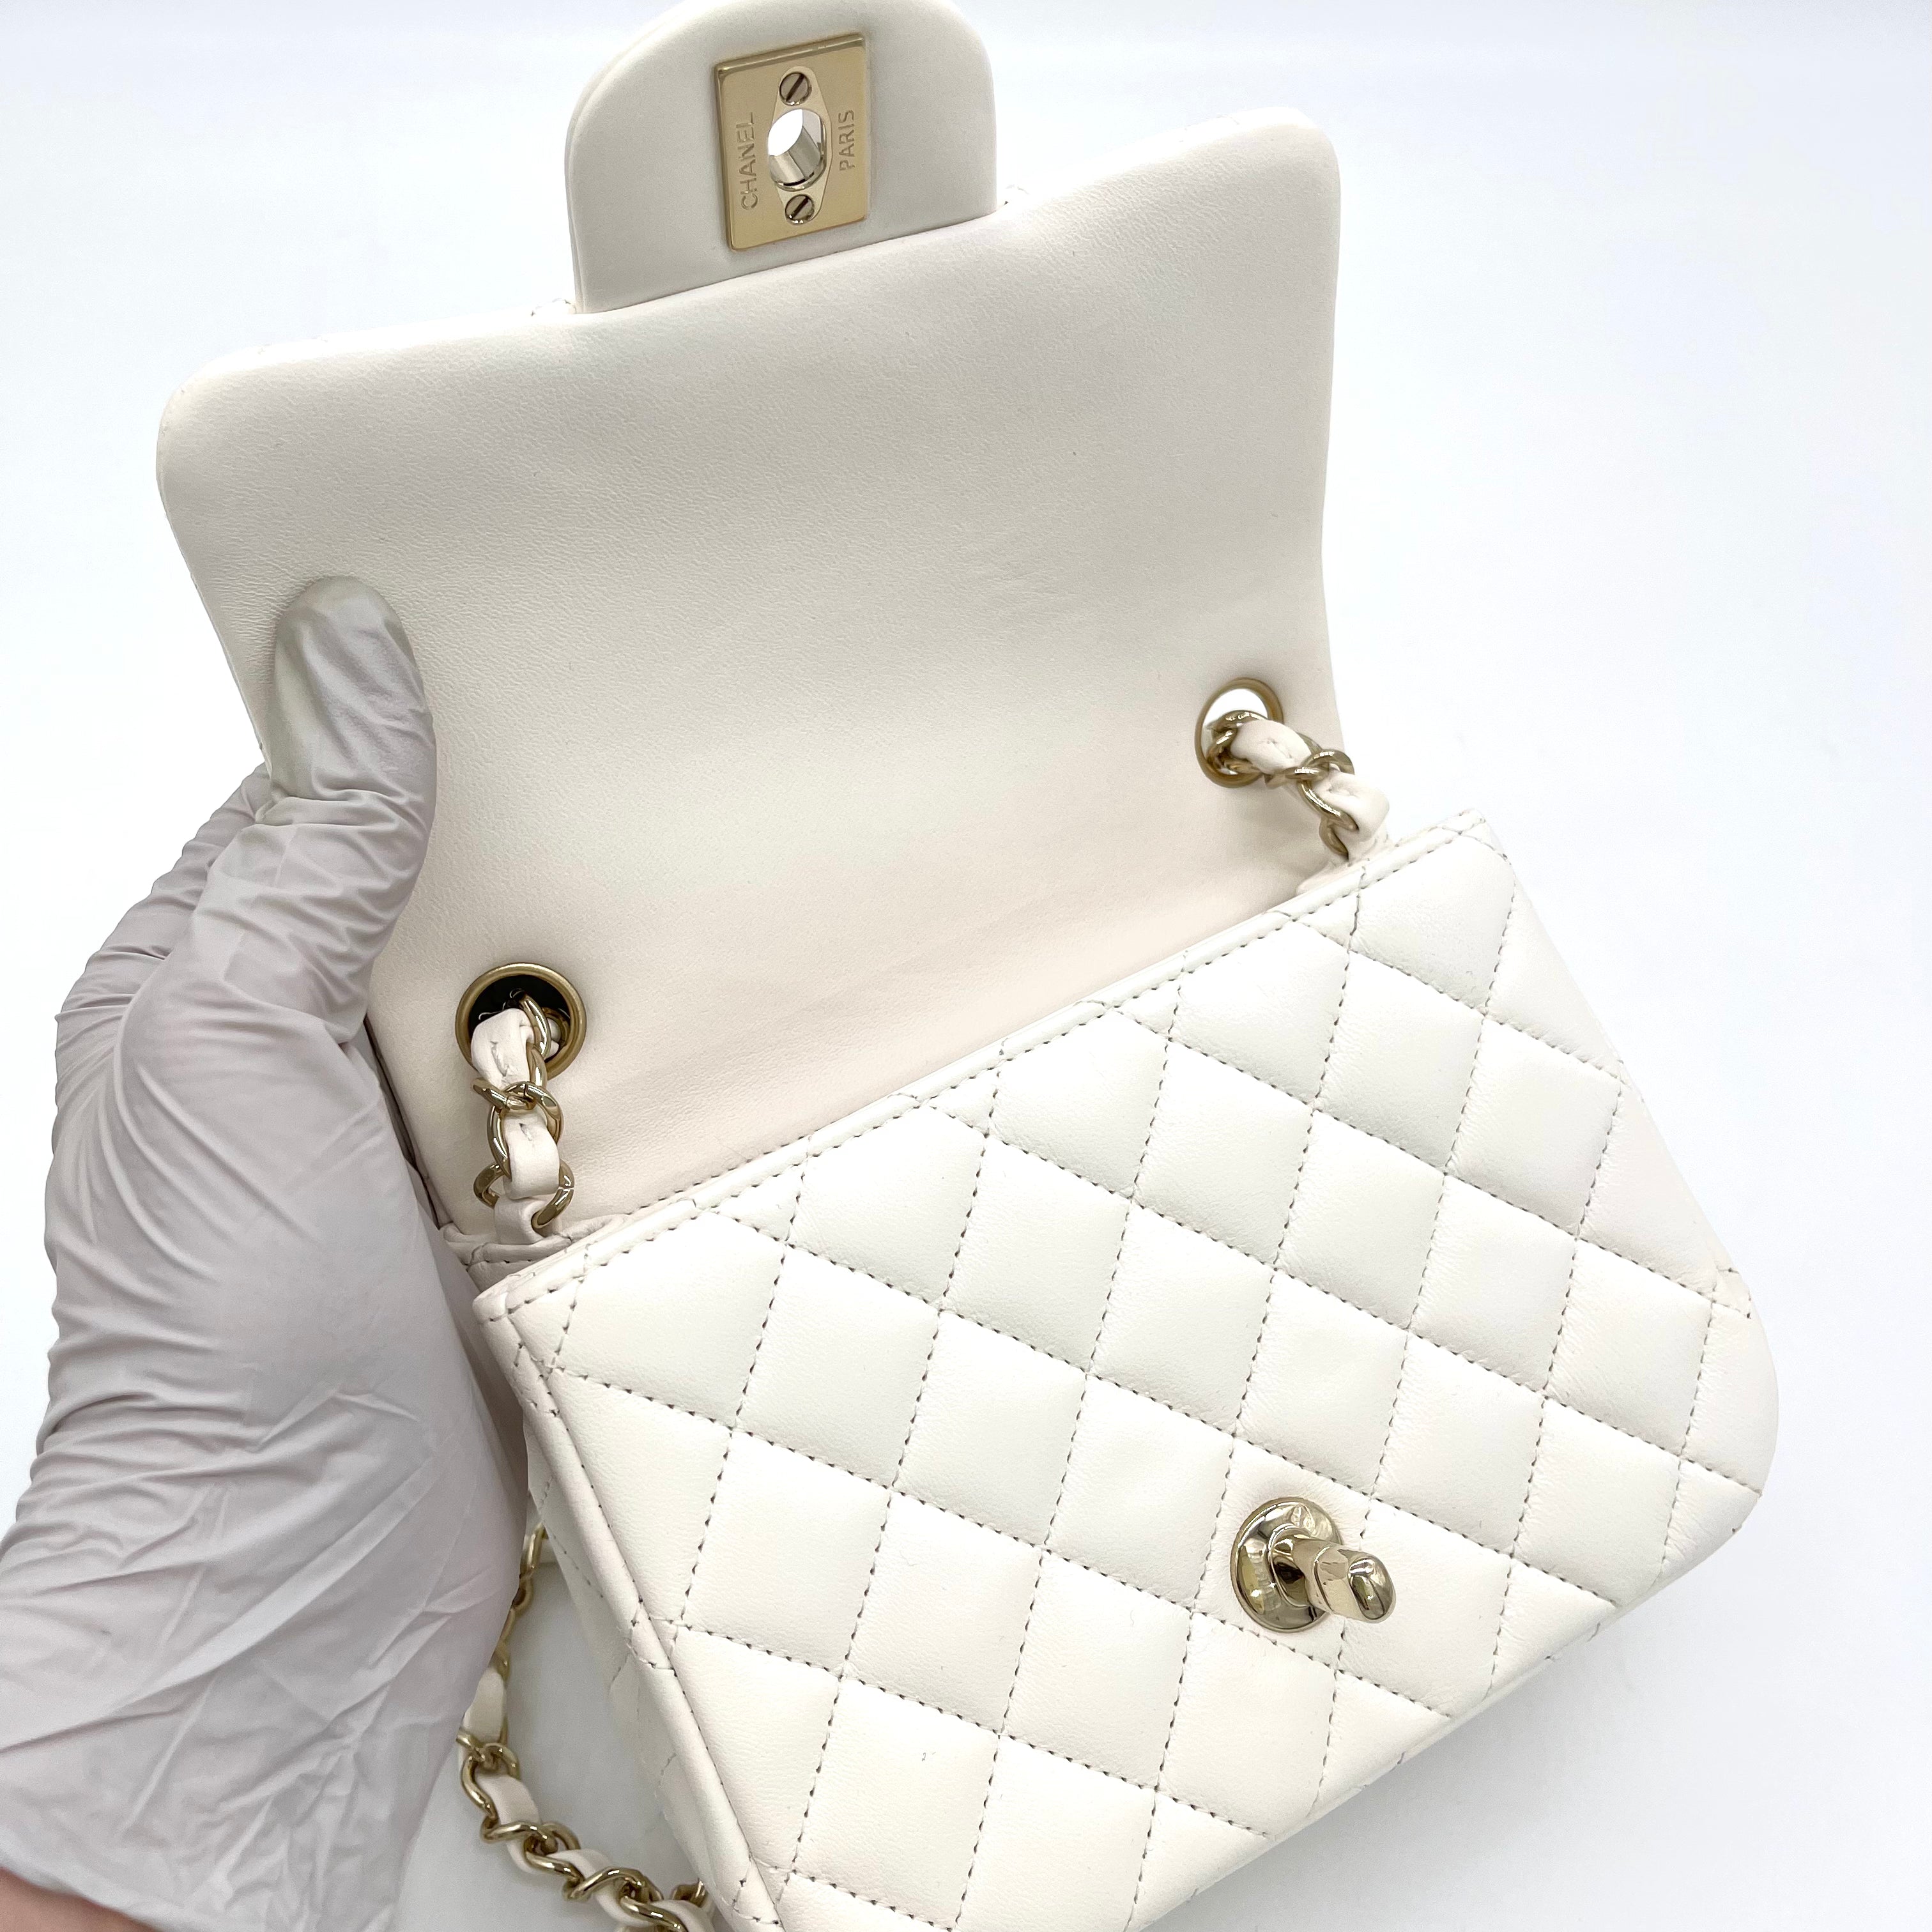 brand new chanel handbag white